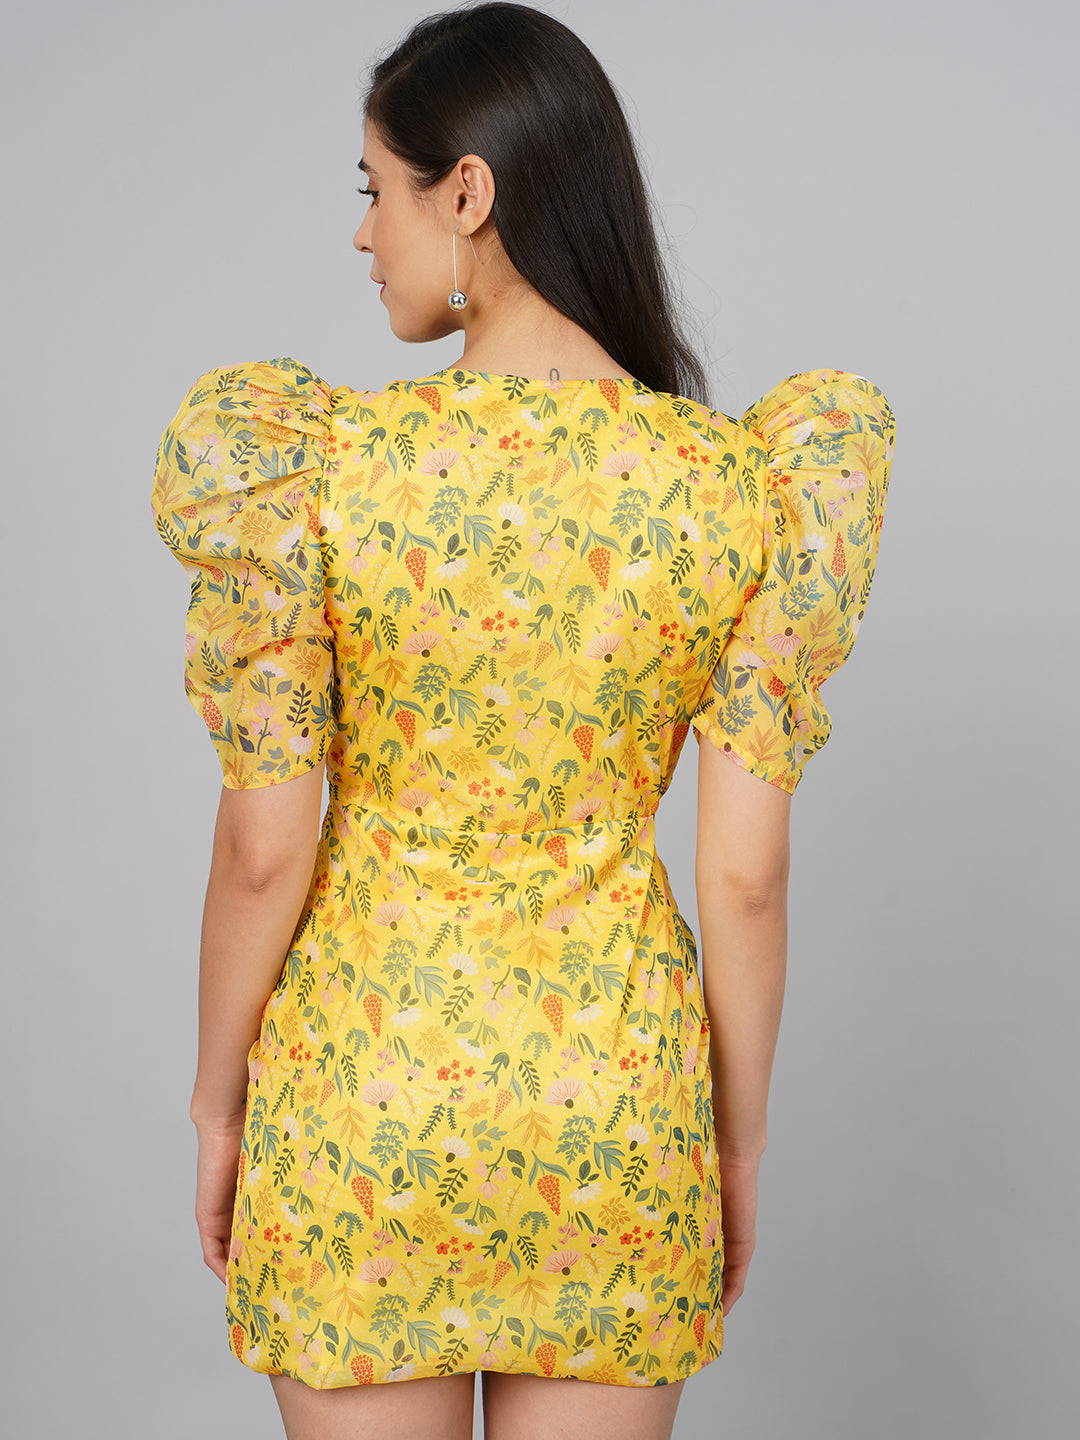 SCORPIUS Yellow Floral Dress